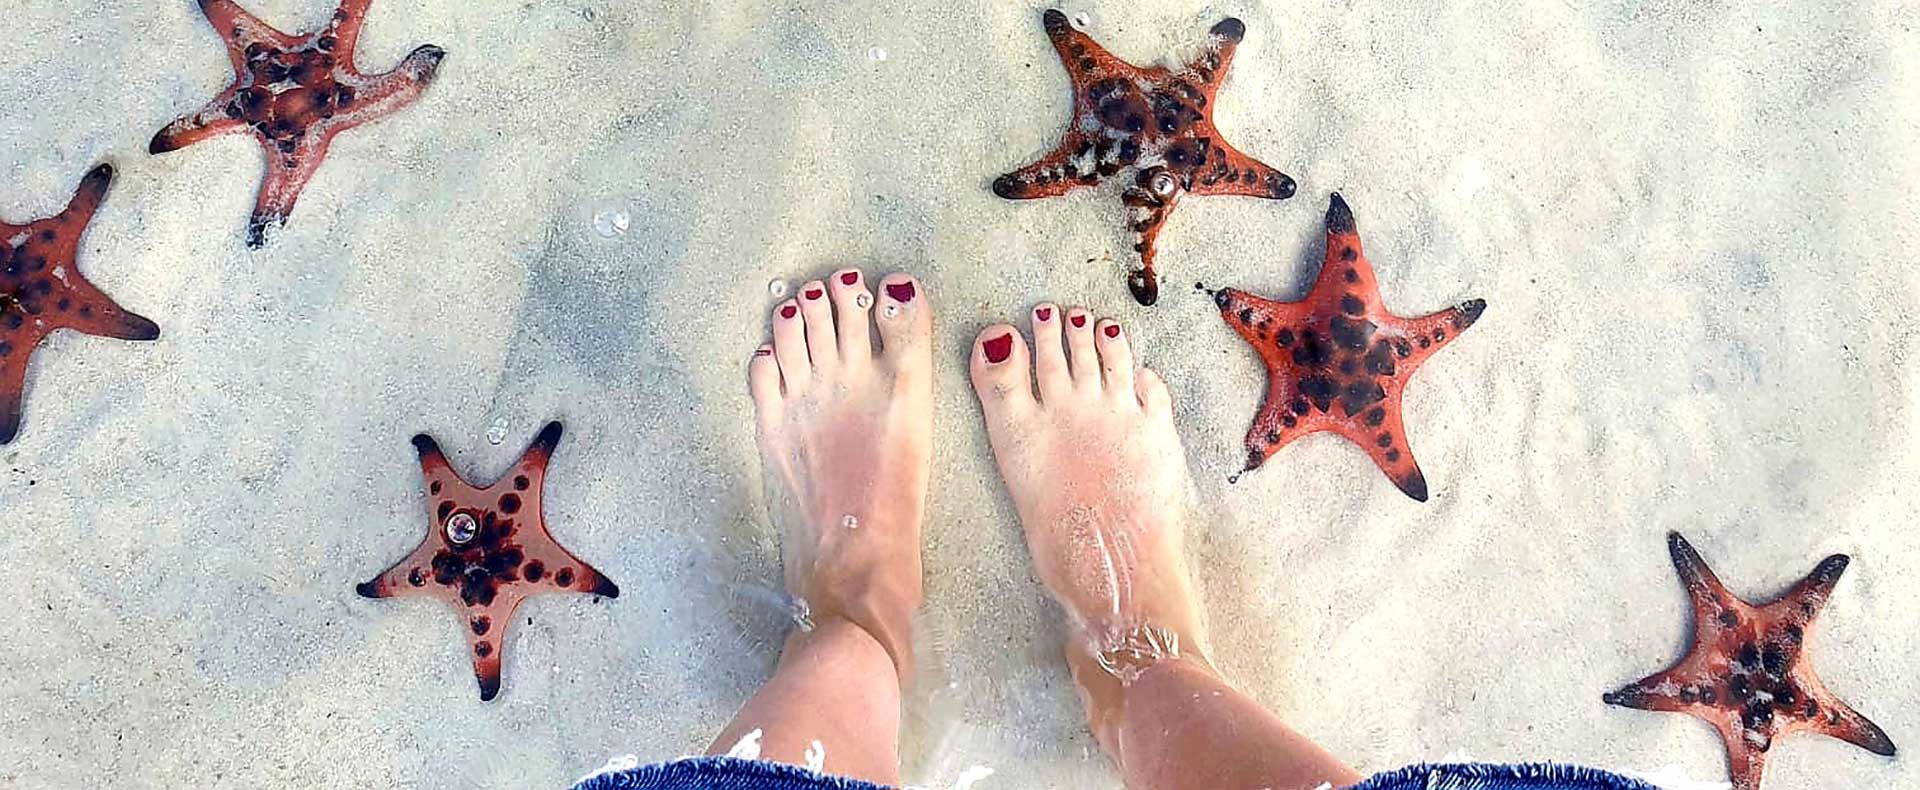 feet in sand